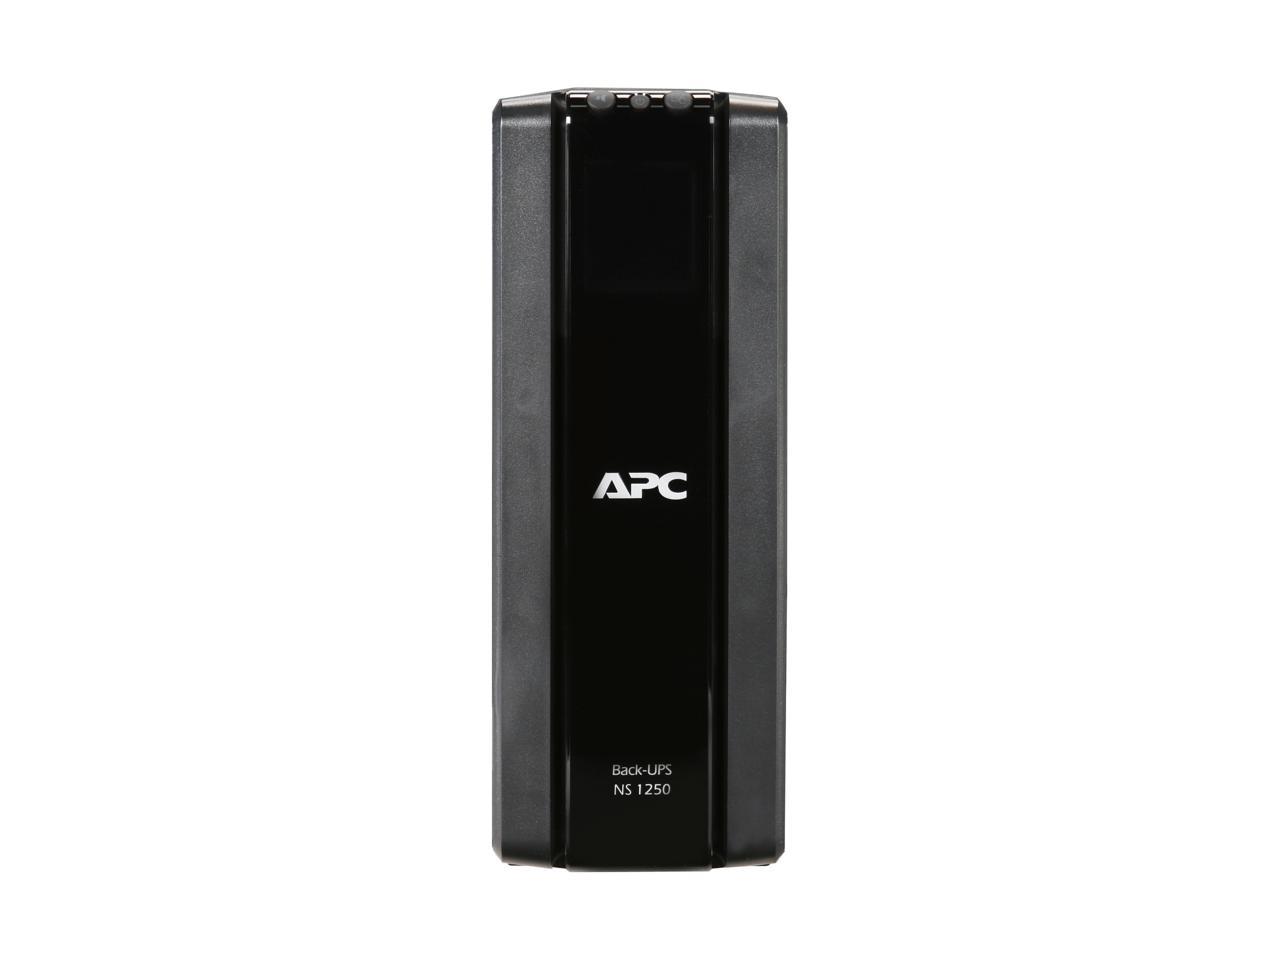 APC BN1250G Battery Backup w/ Surge Protection - Newegg.com